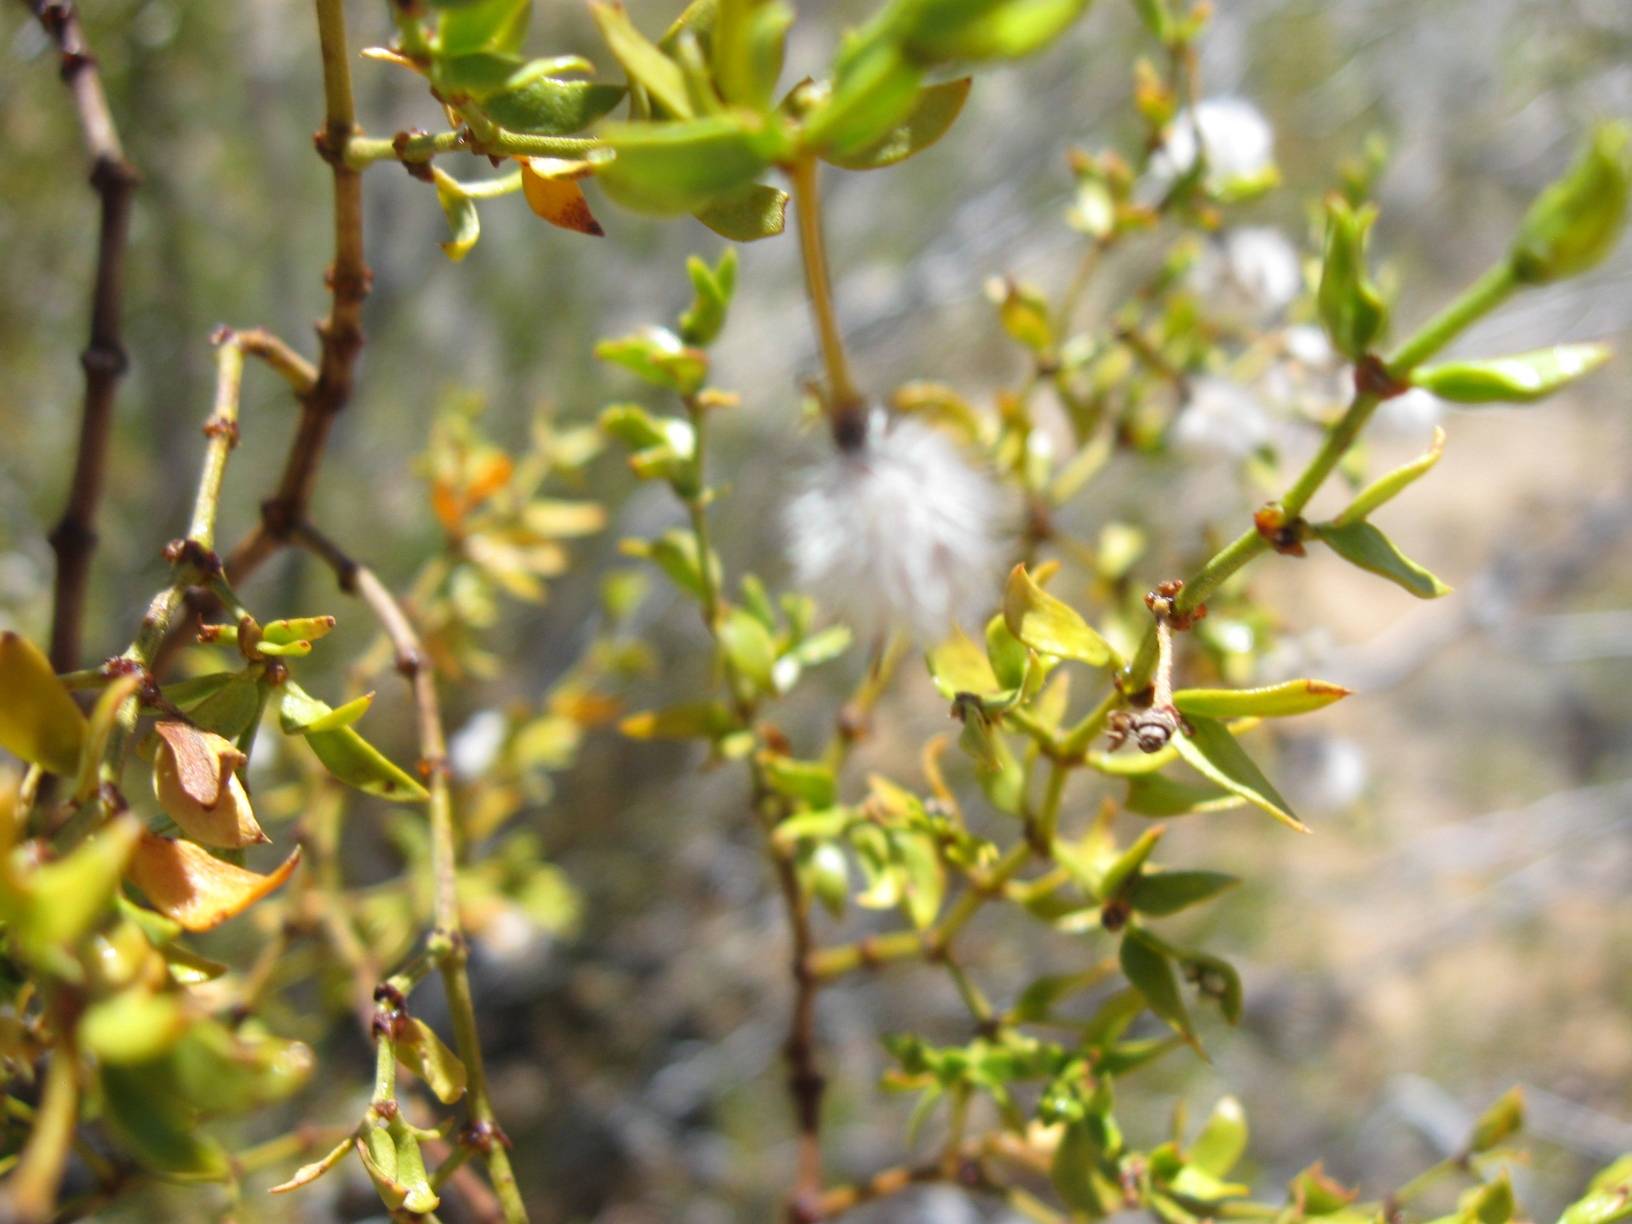 Image: A close-up of a creosote bush